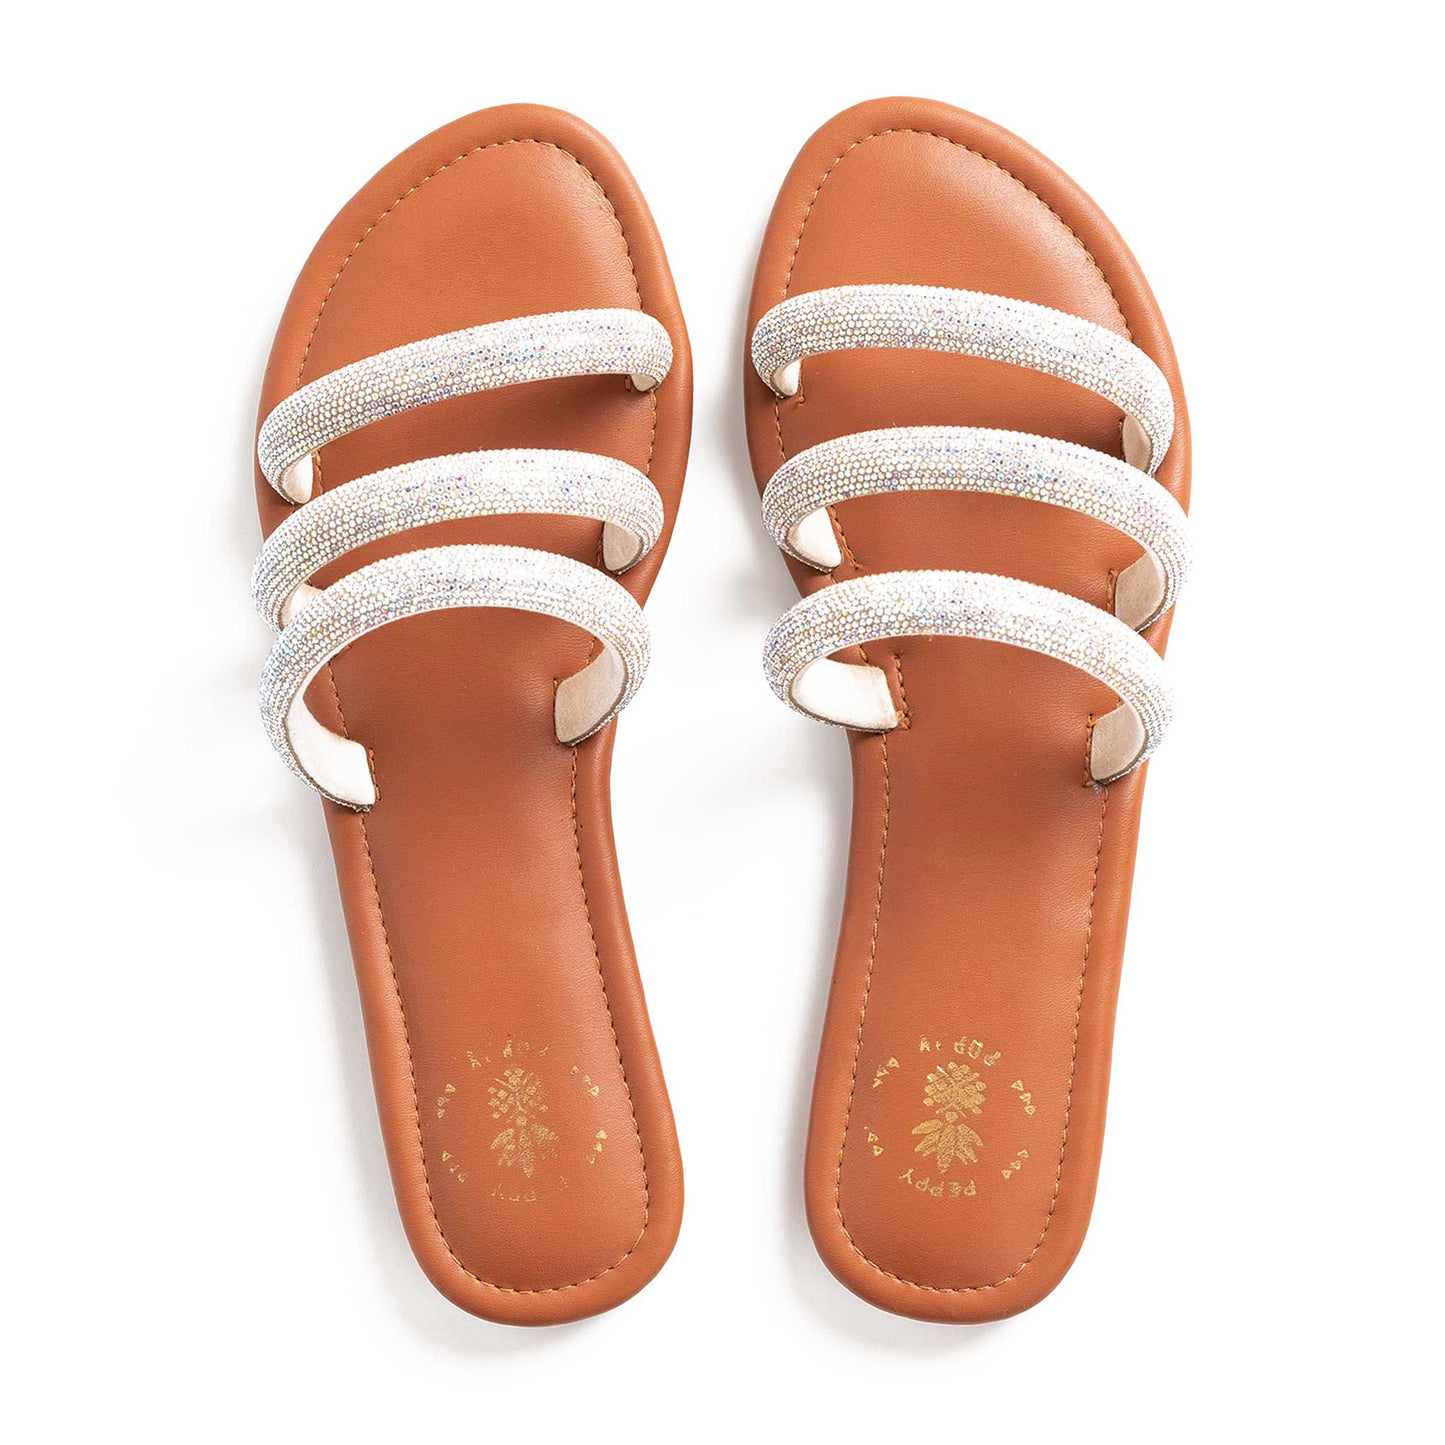 Classic Bling Sandals - Tan Brown